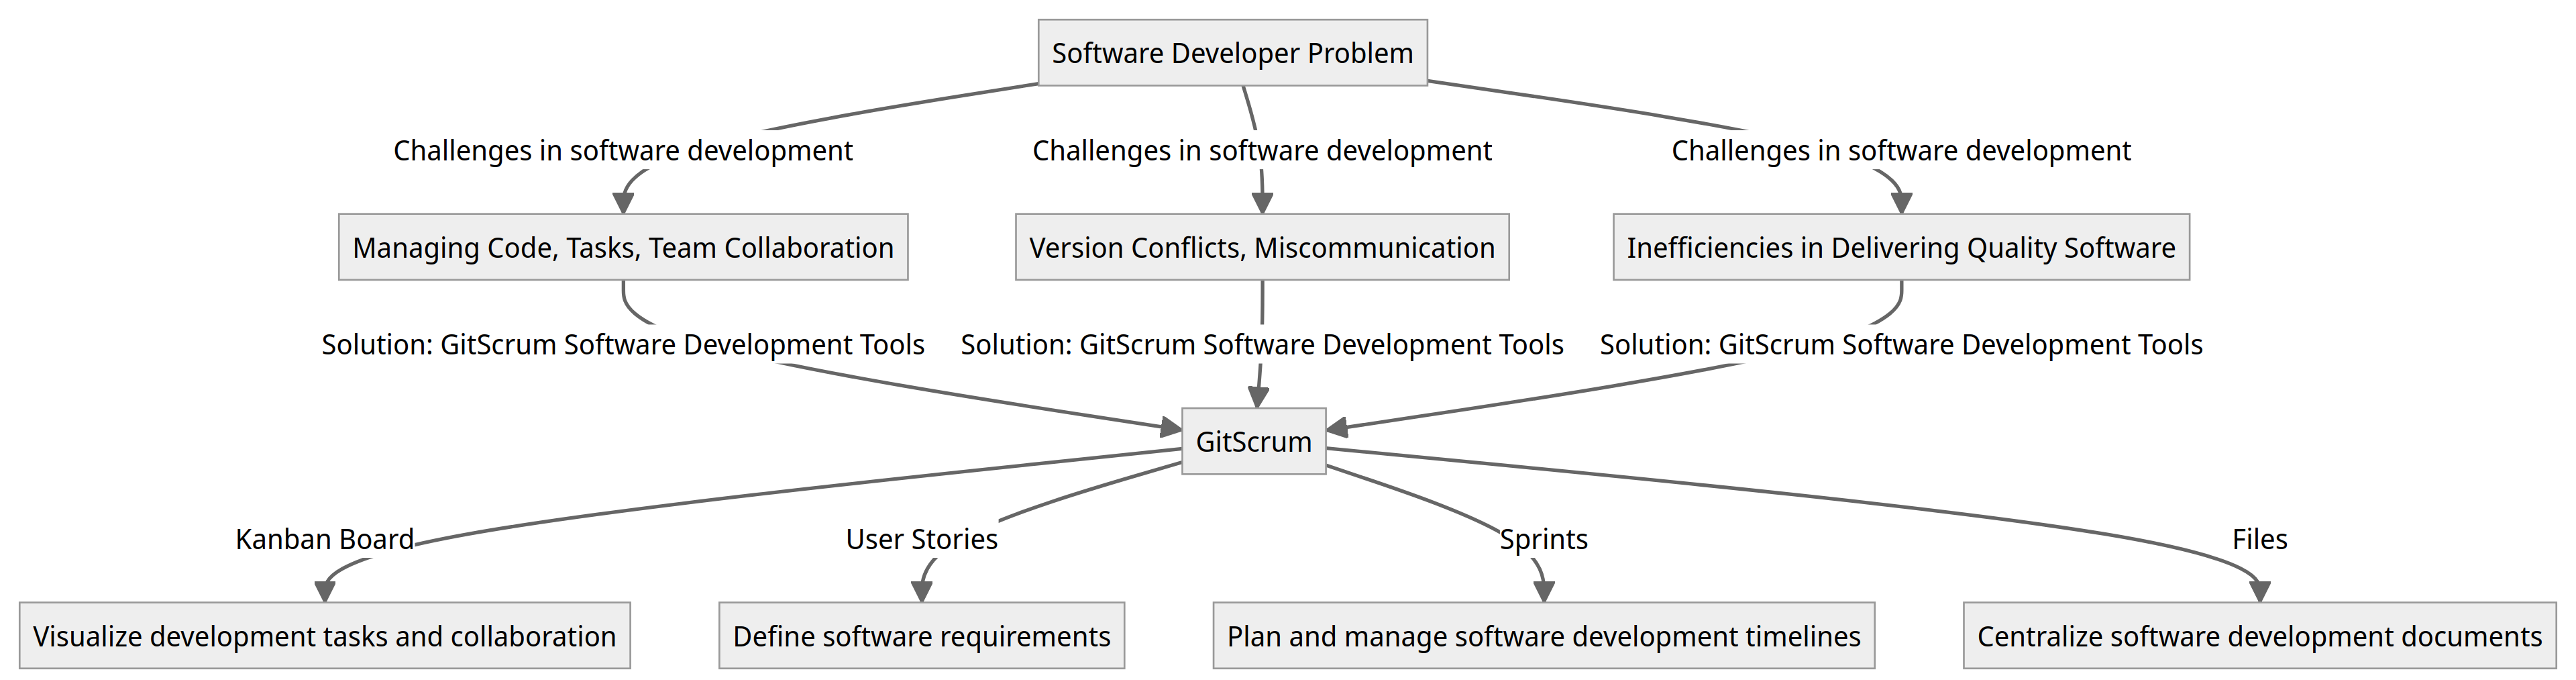 Diagram - Software Developer